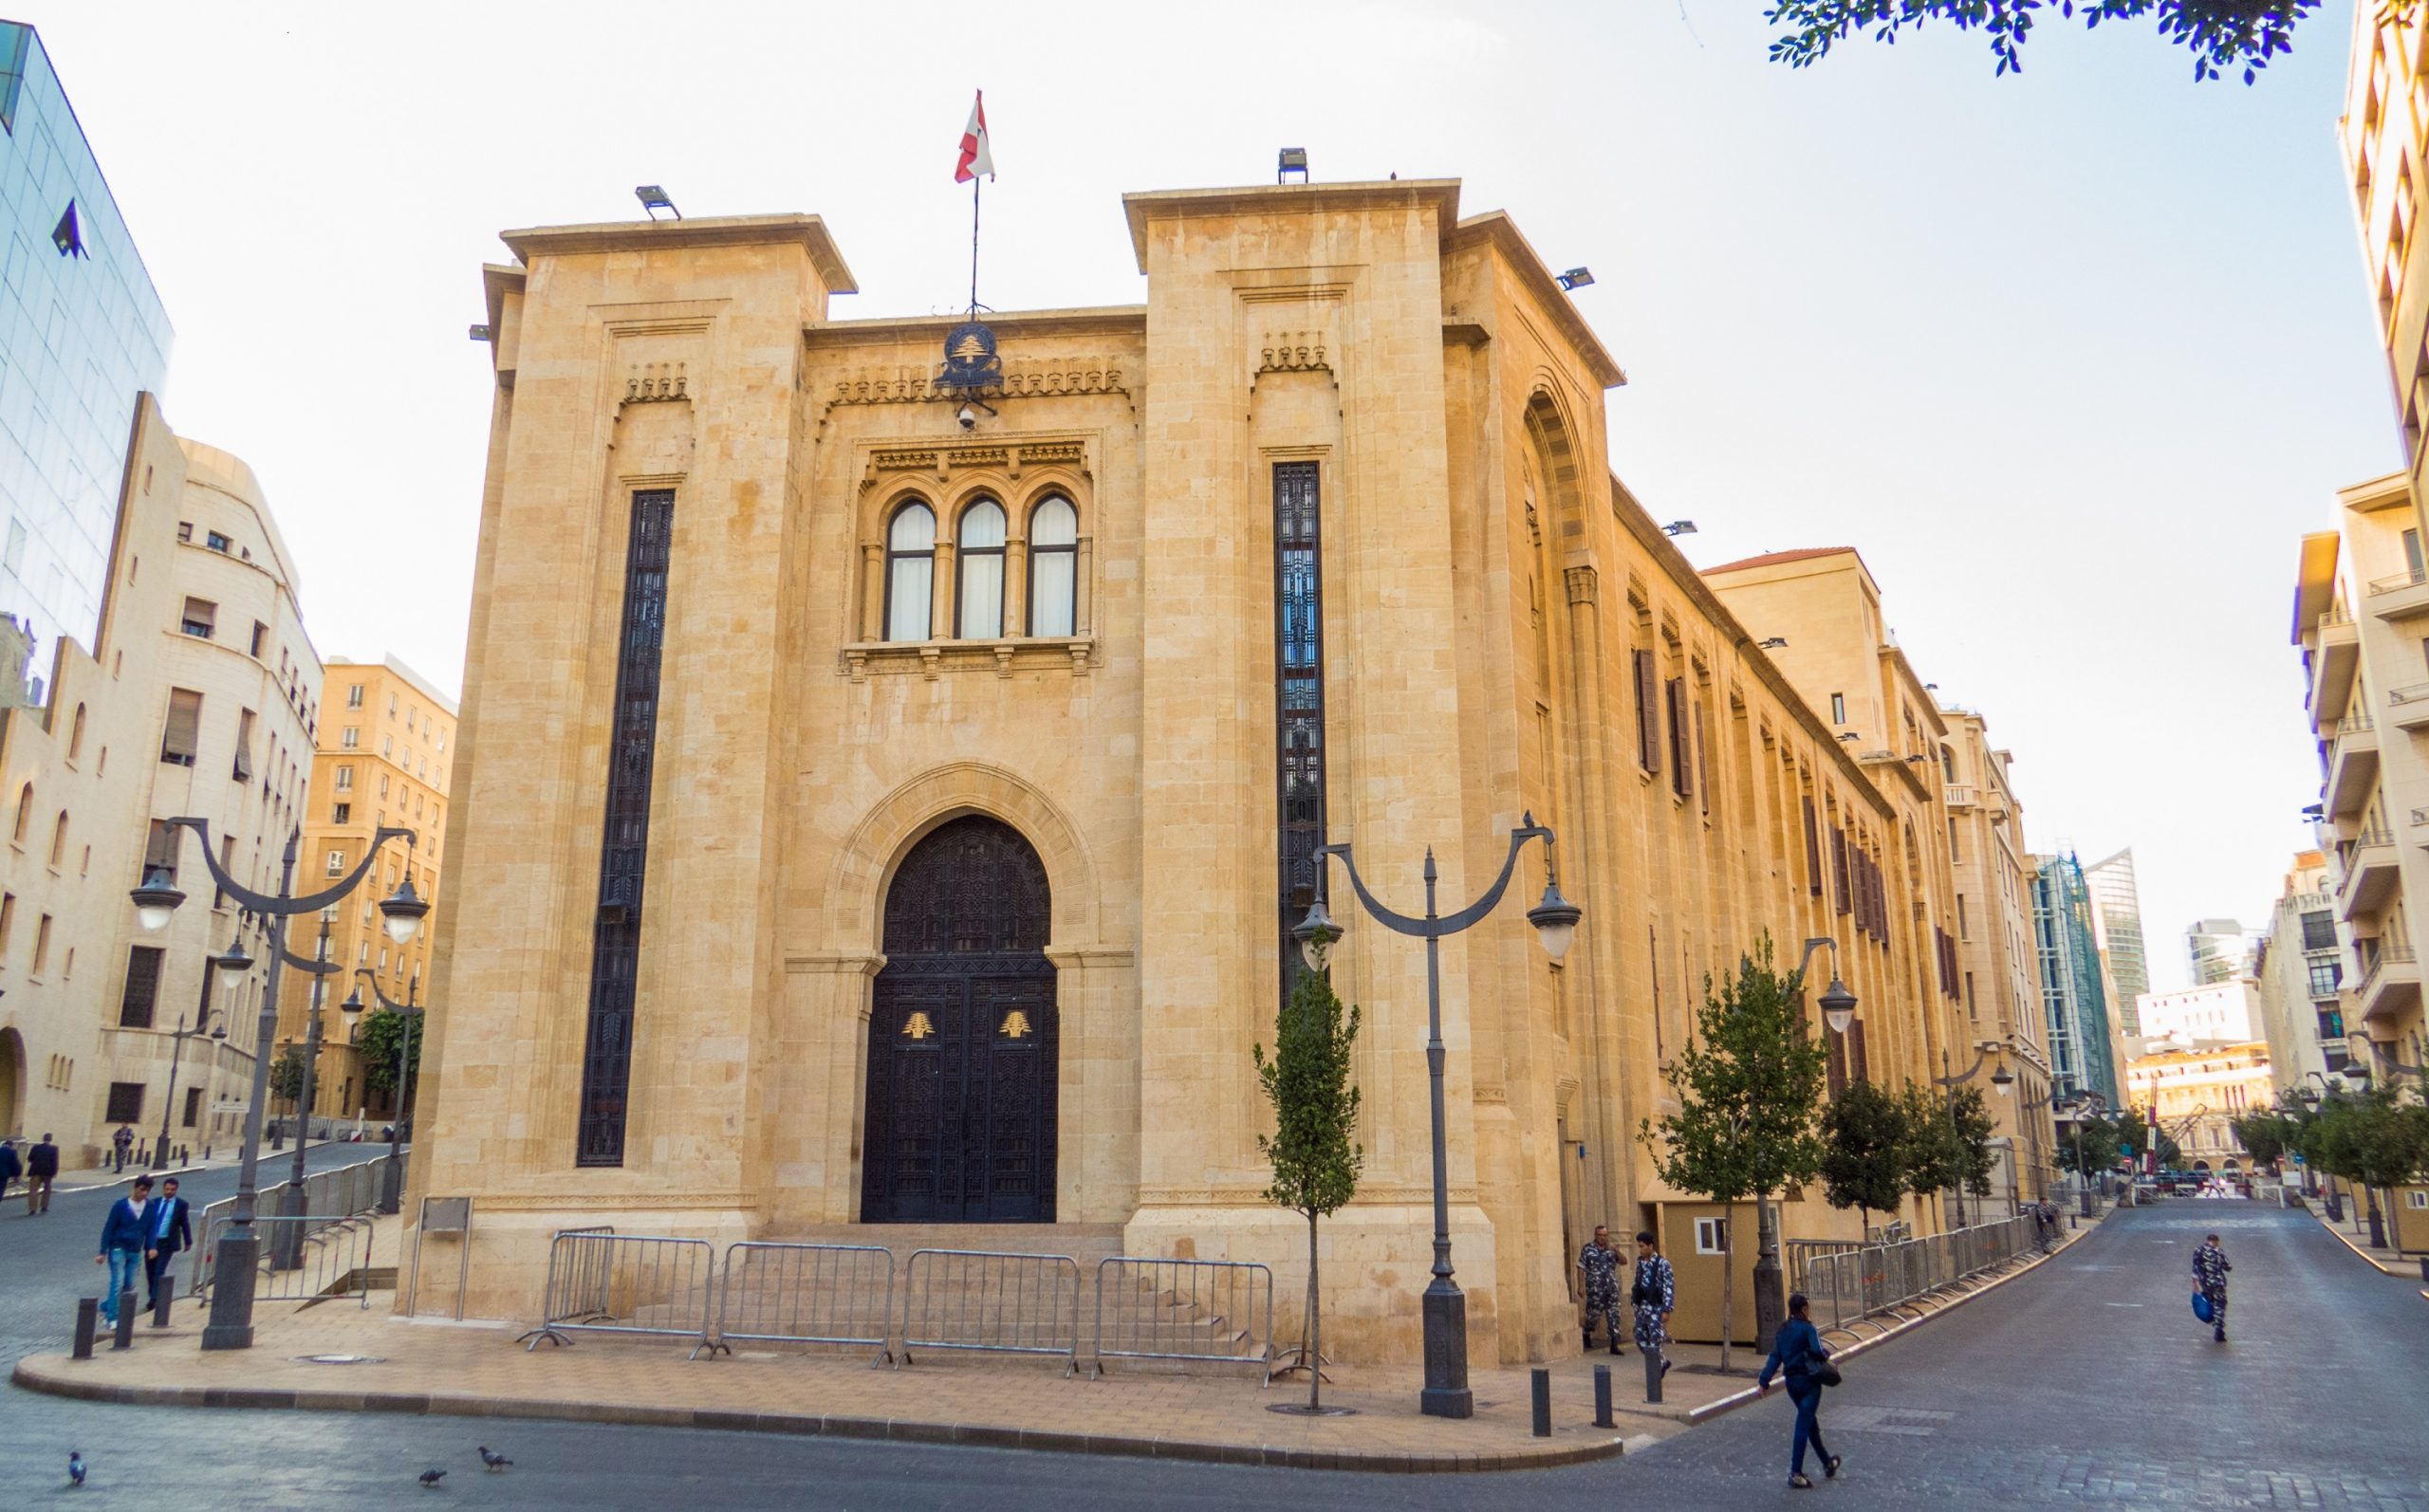 Lebanon house of parliament